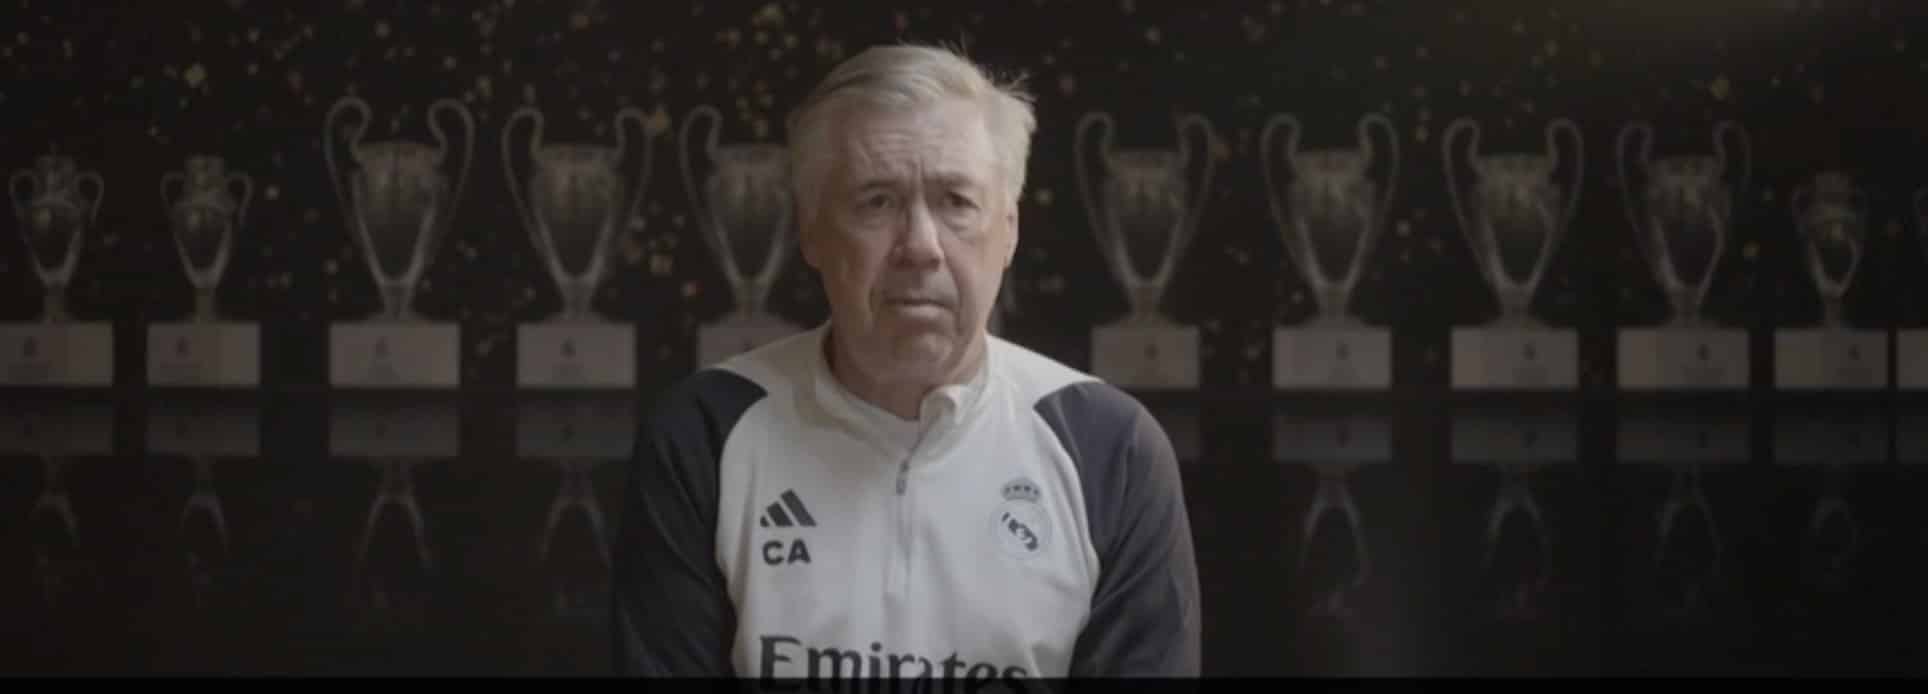 Carlo Ancelotti Real Madrid Champions League